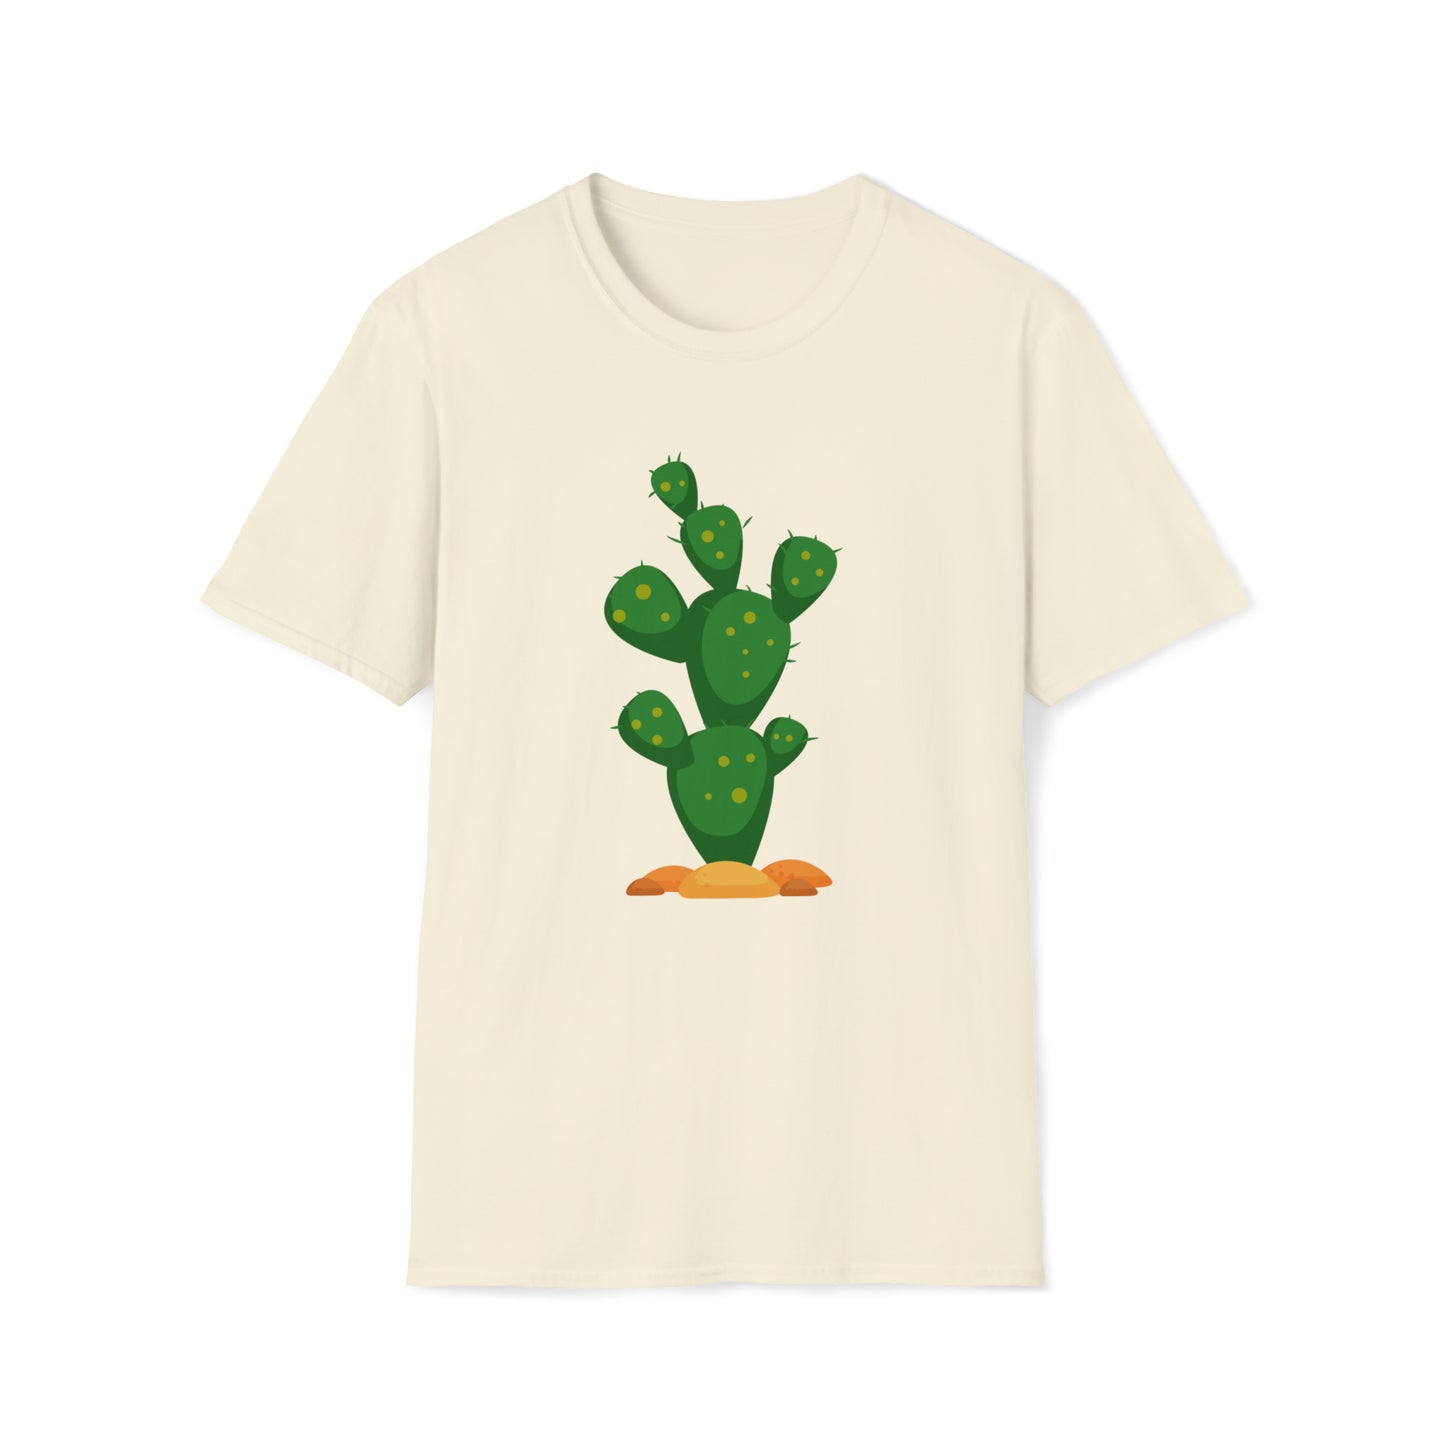 I'm Cactus T-Shirt